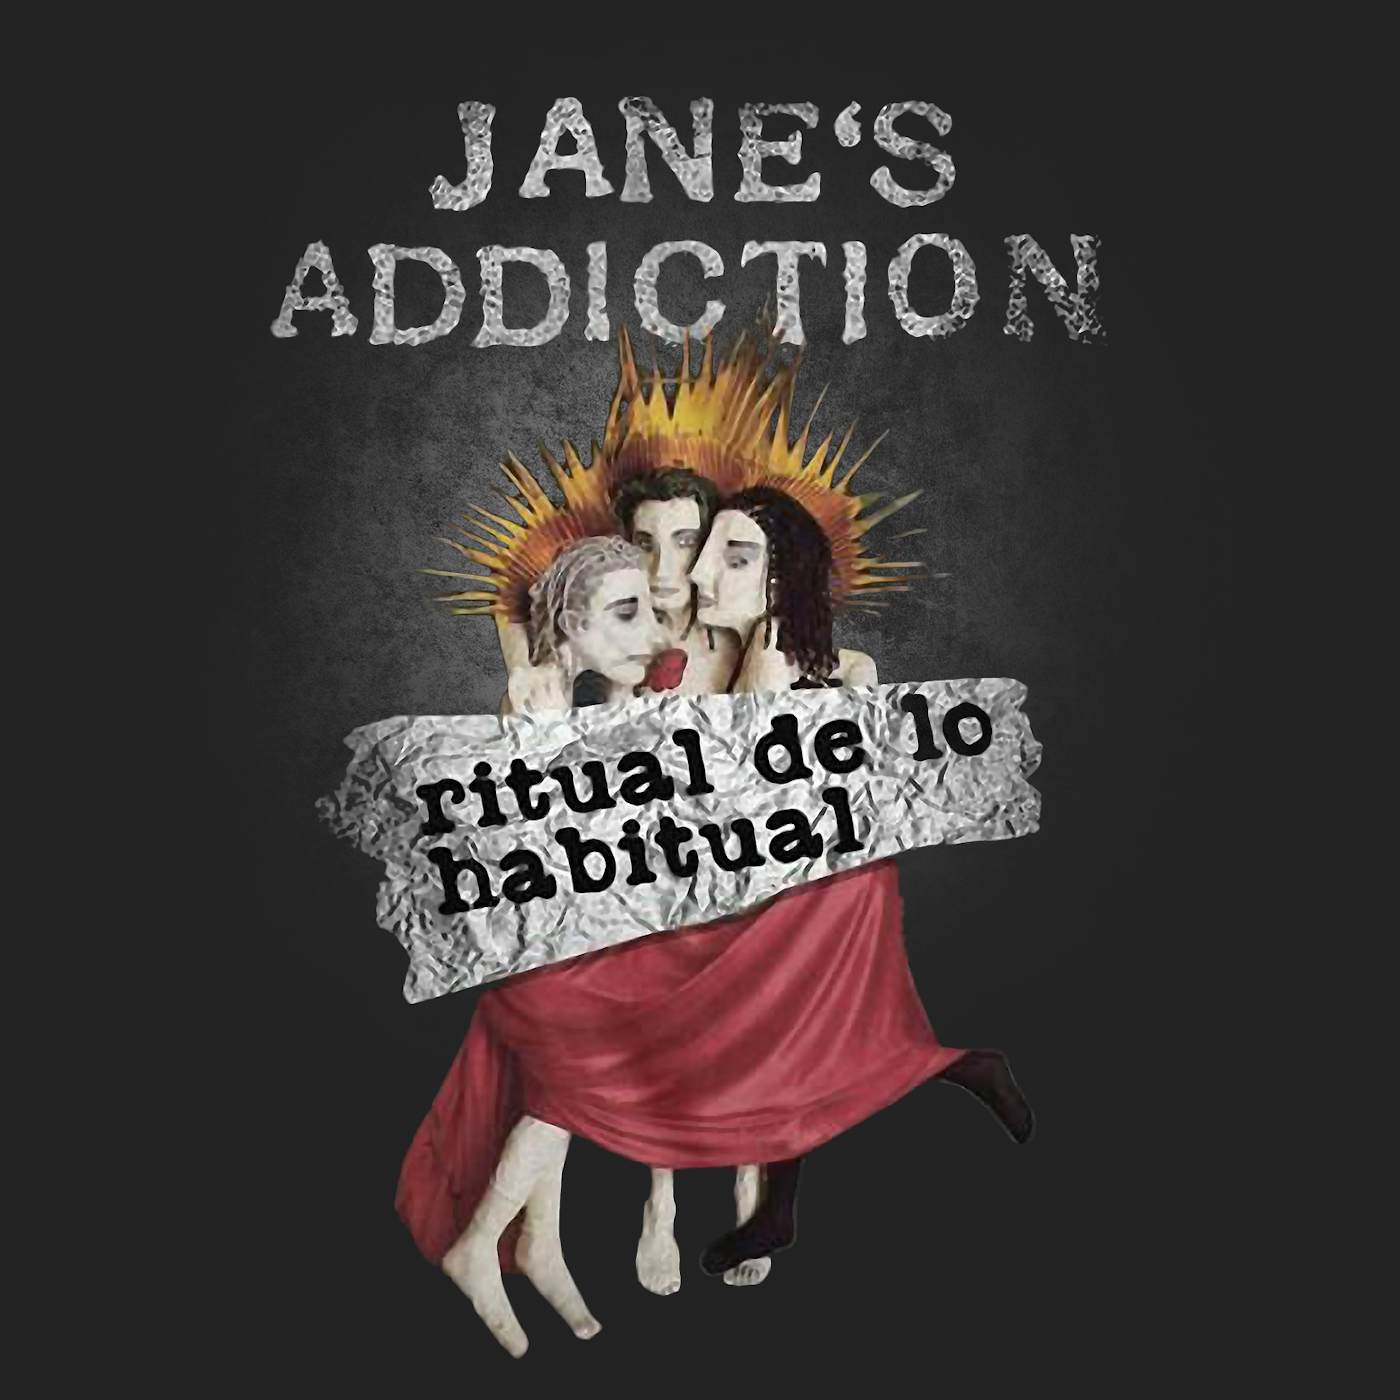 Jane's Addiction Jane’s Addiction T-Shirt | Ritual de lo Habitual Album Art Jane’s Addiction Shirt